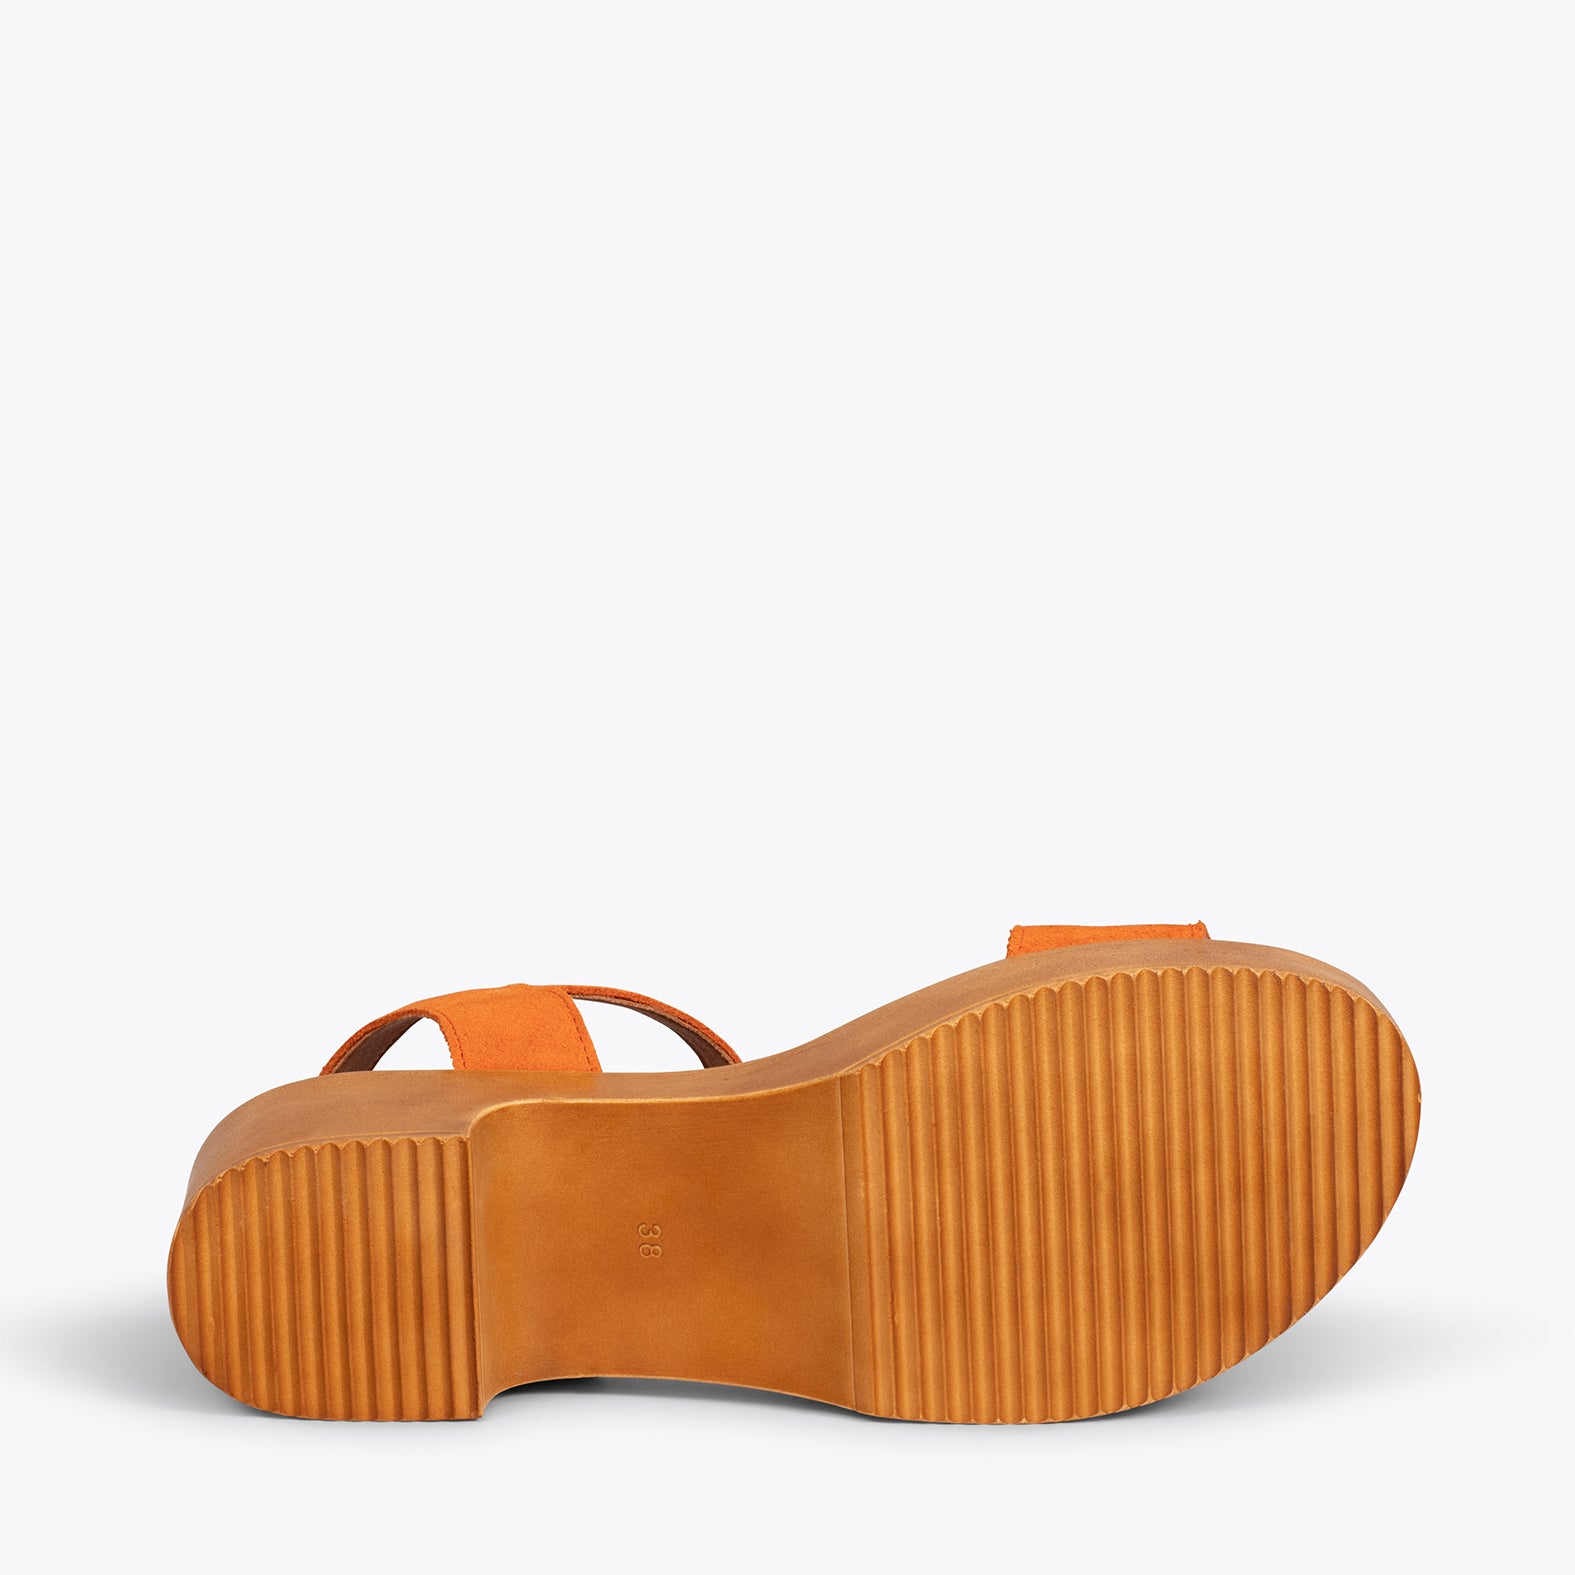 CALA – ORANGE sandals with platform